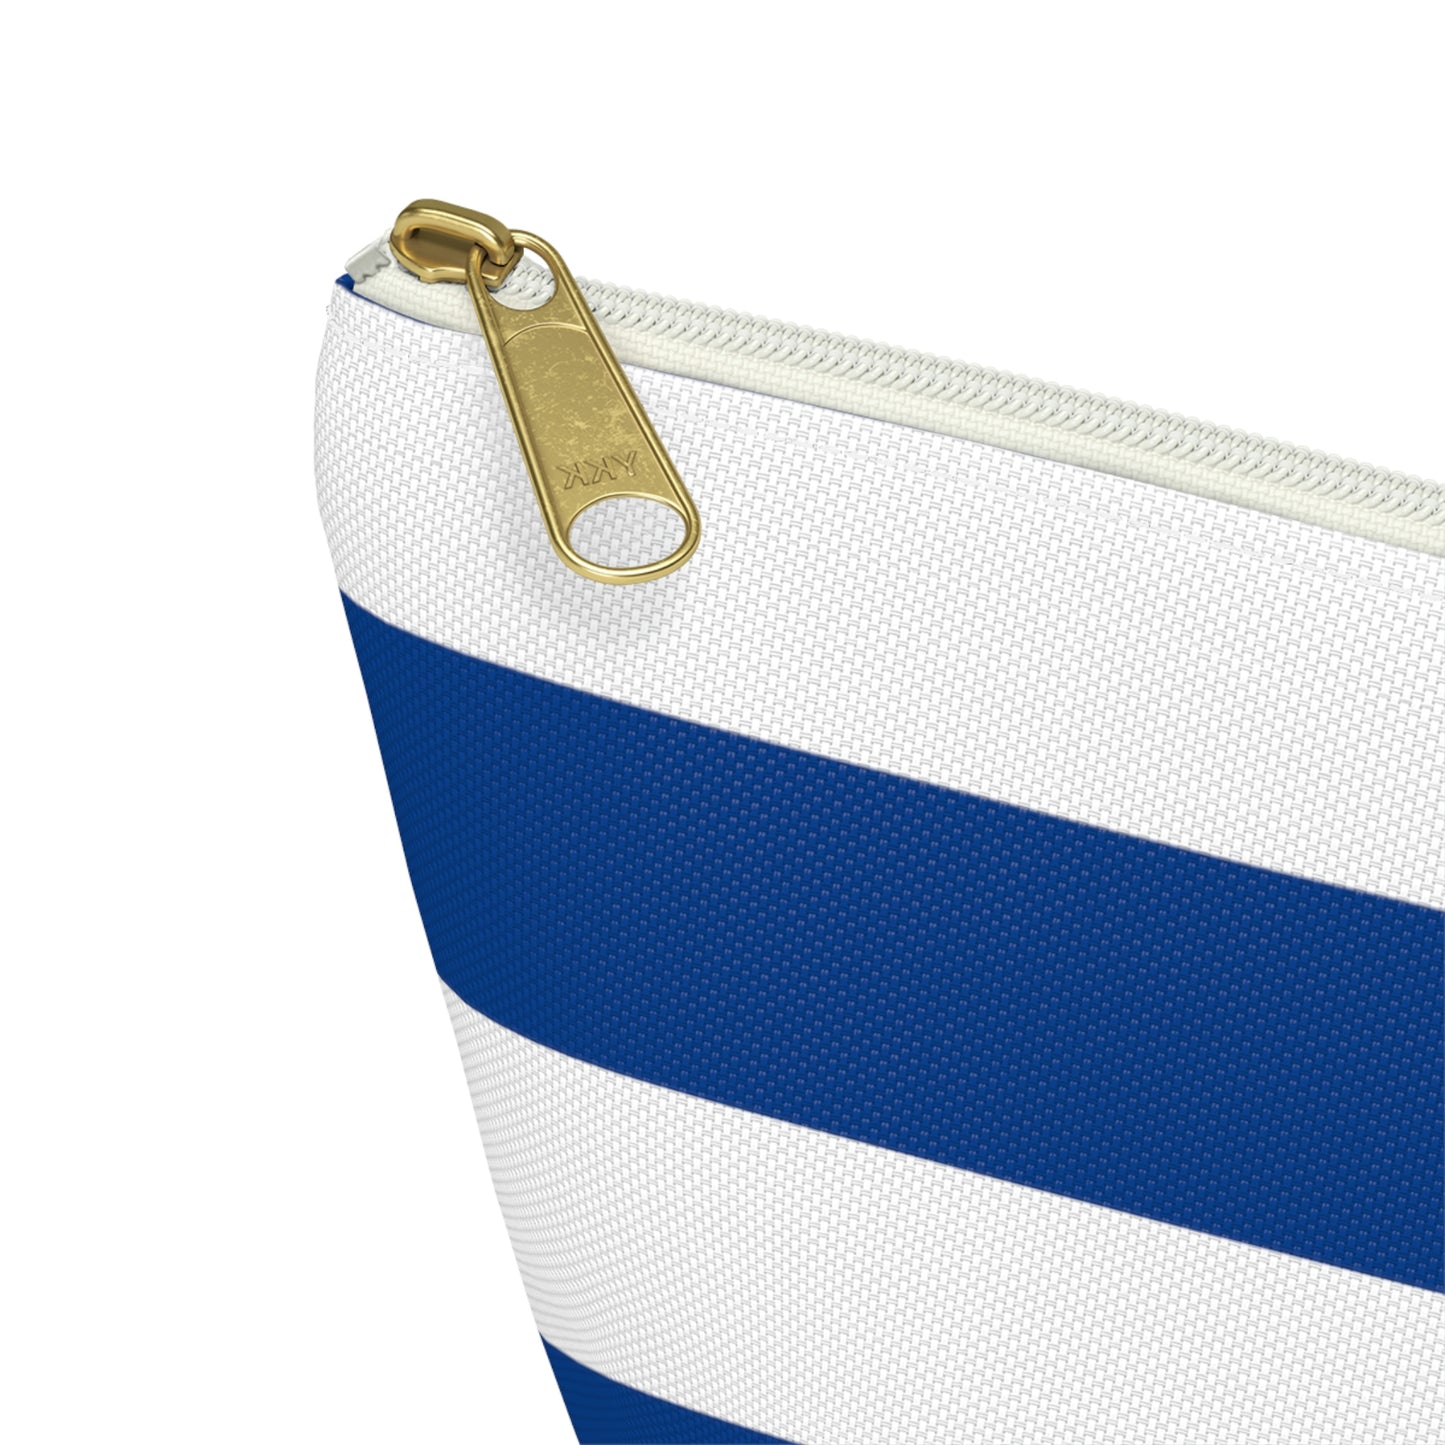 Big Bottom Zipper Pouch - True Blue/White Stripes